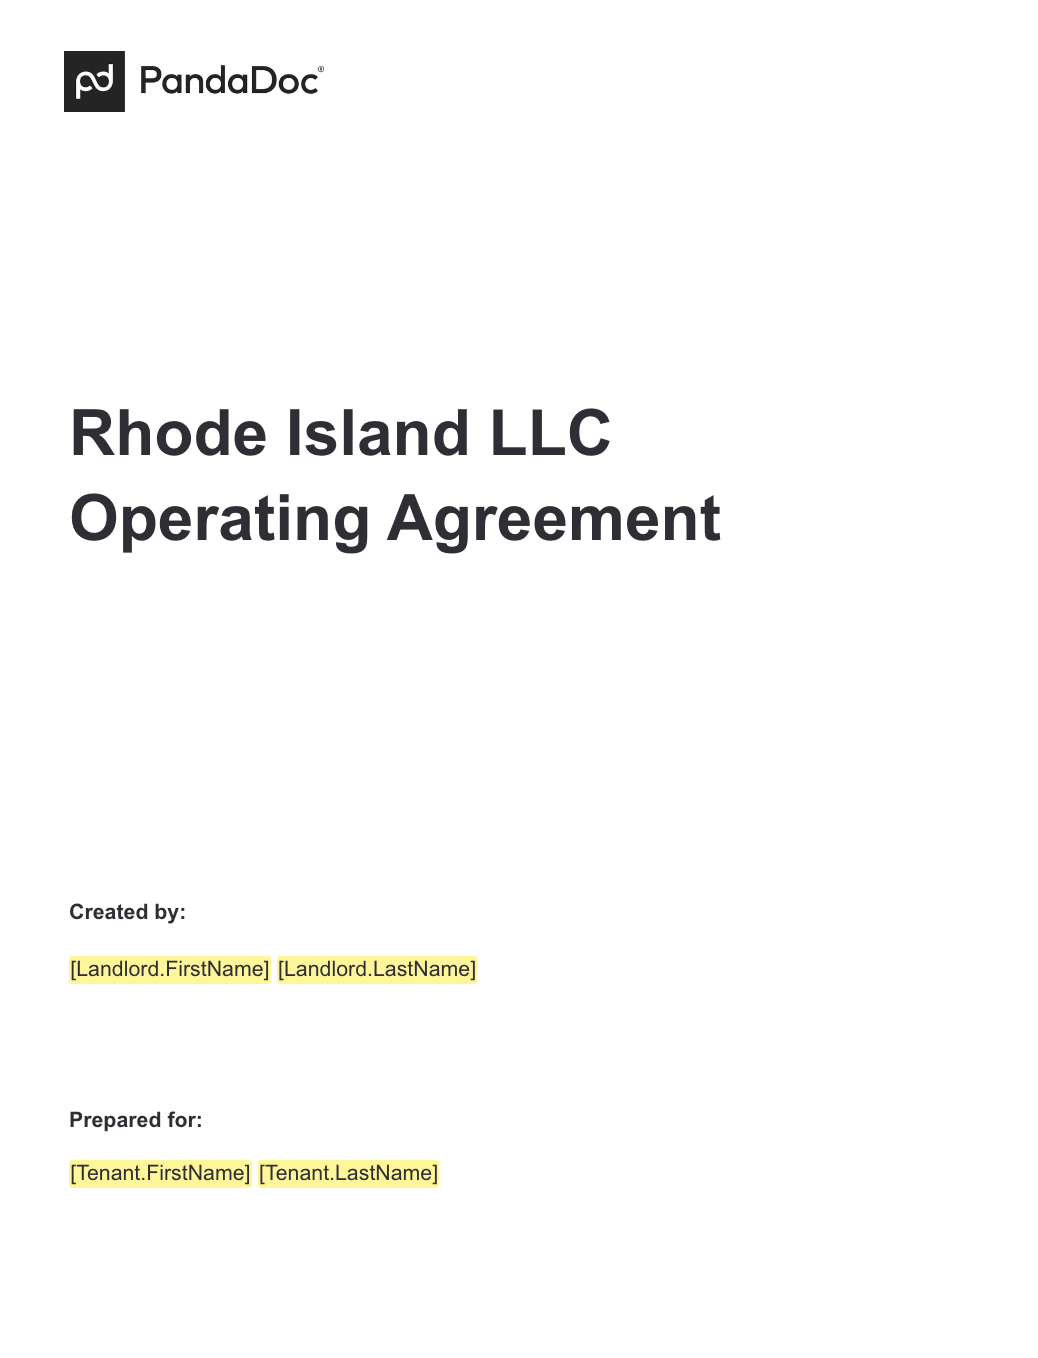 Rhode Island LLC Operating Agreement 